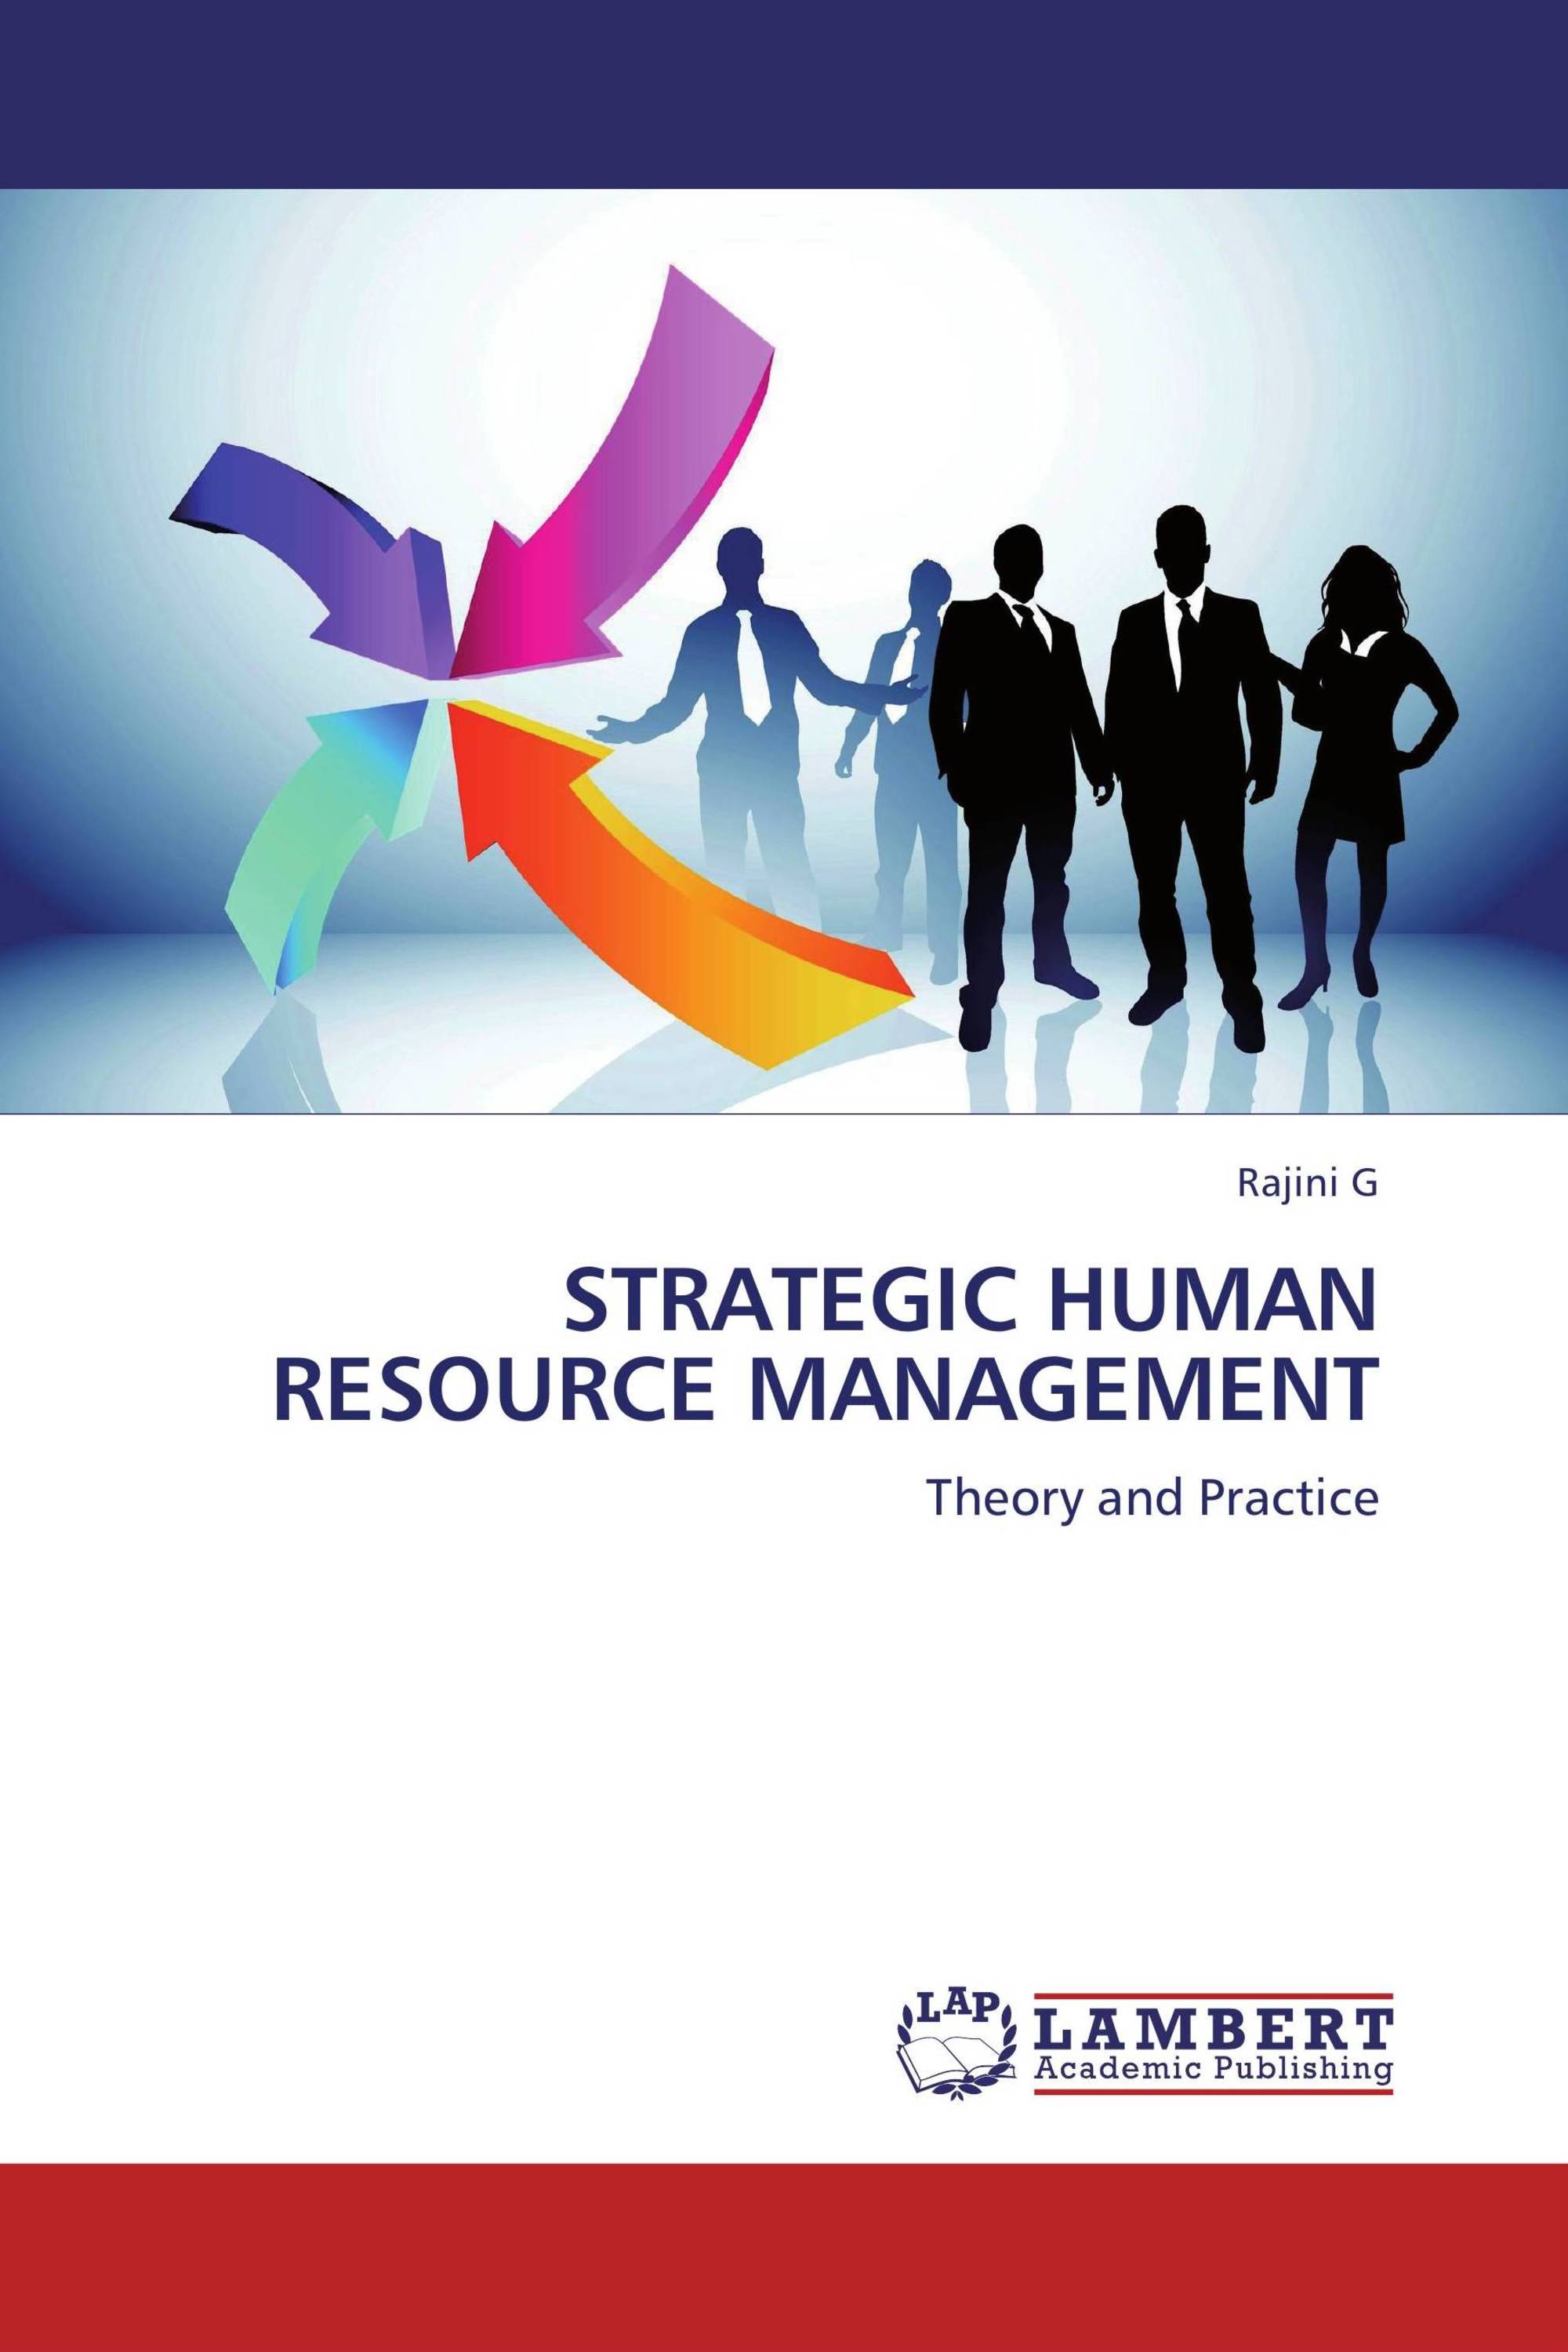 literature review of strategic human resource management